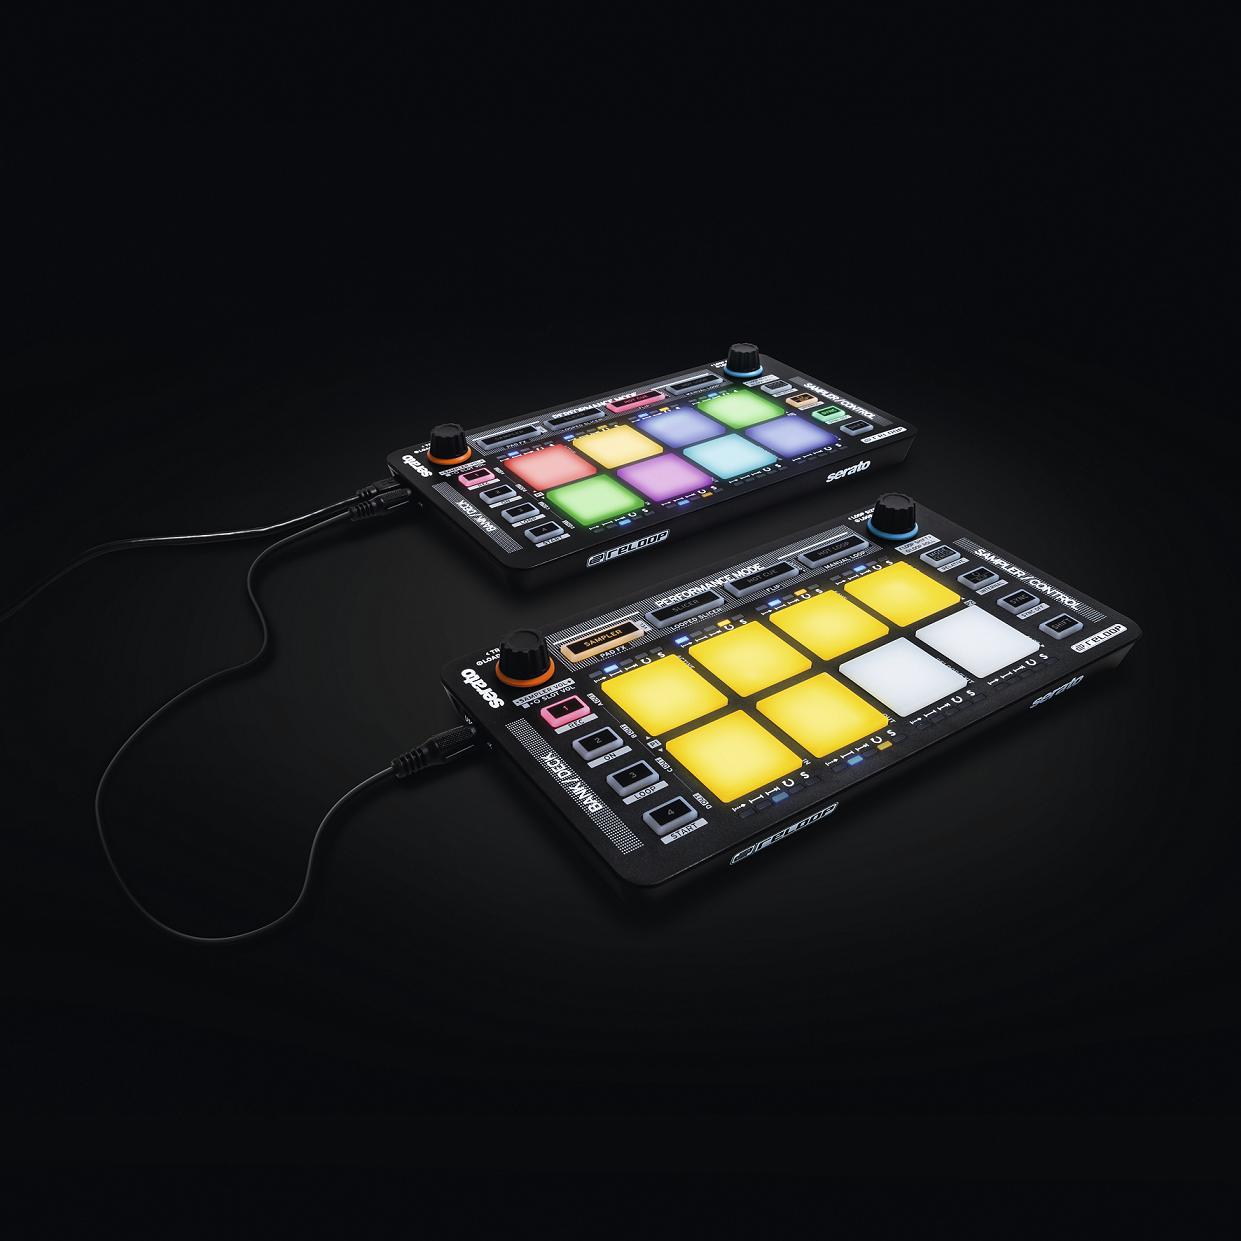 RELOOP NEON Modular Drum Pad Controller for Serato DJ